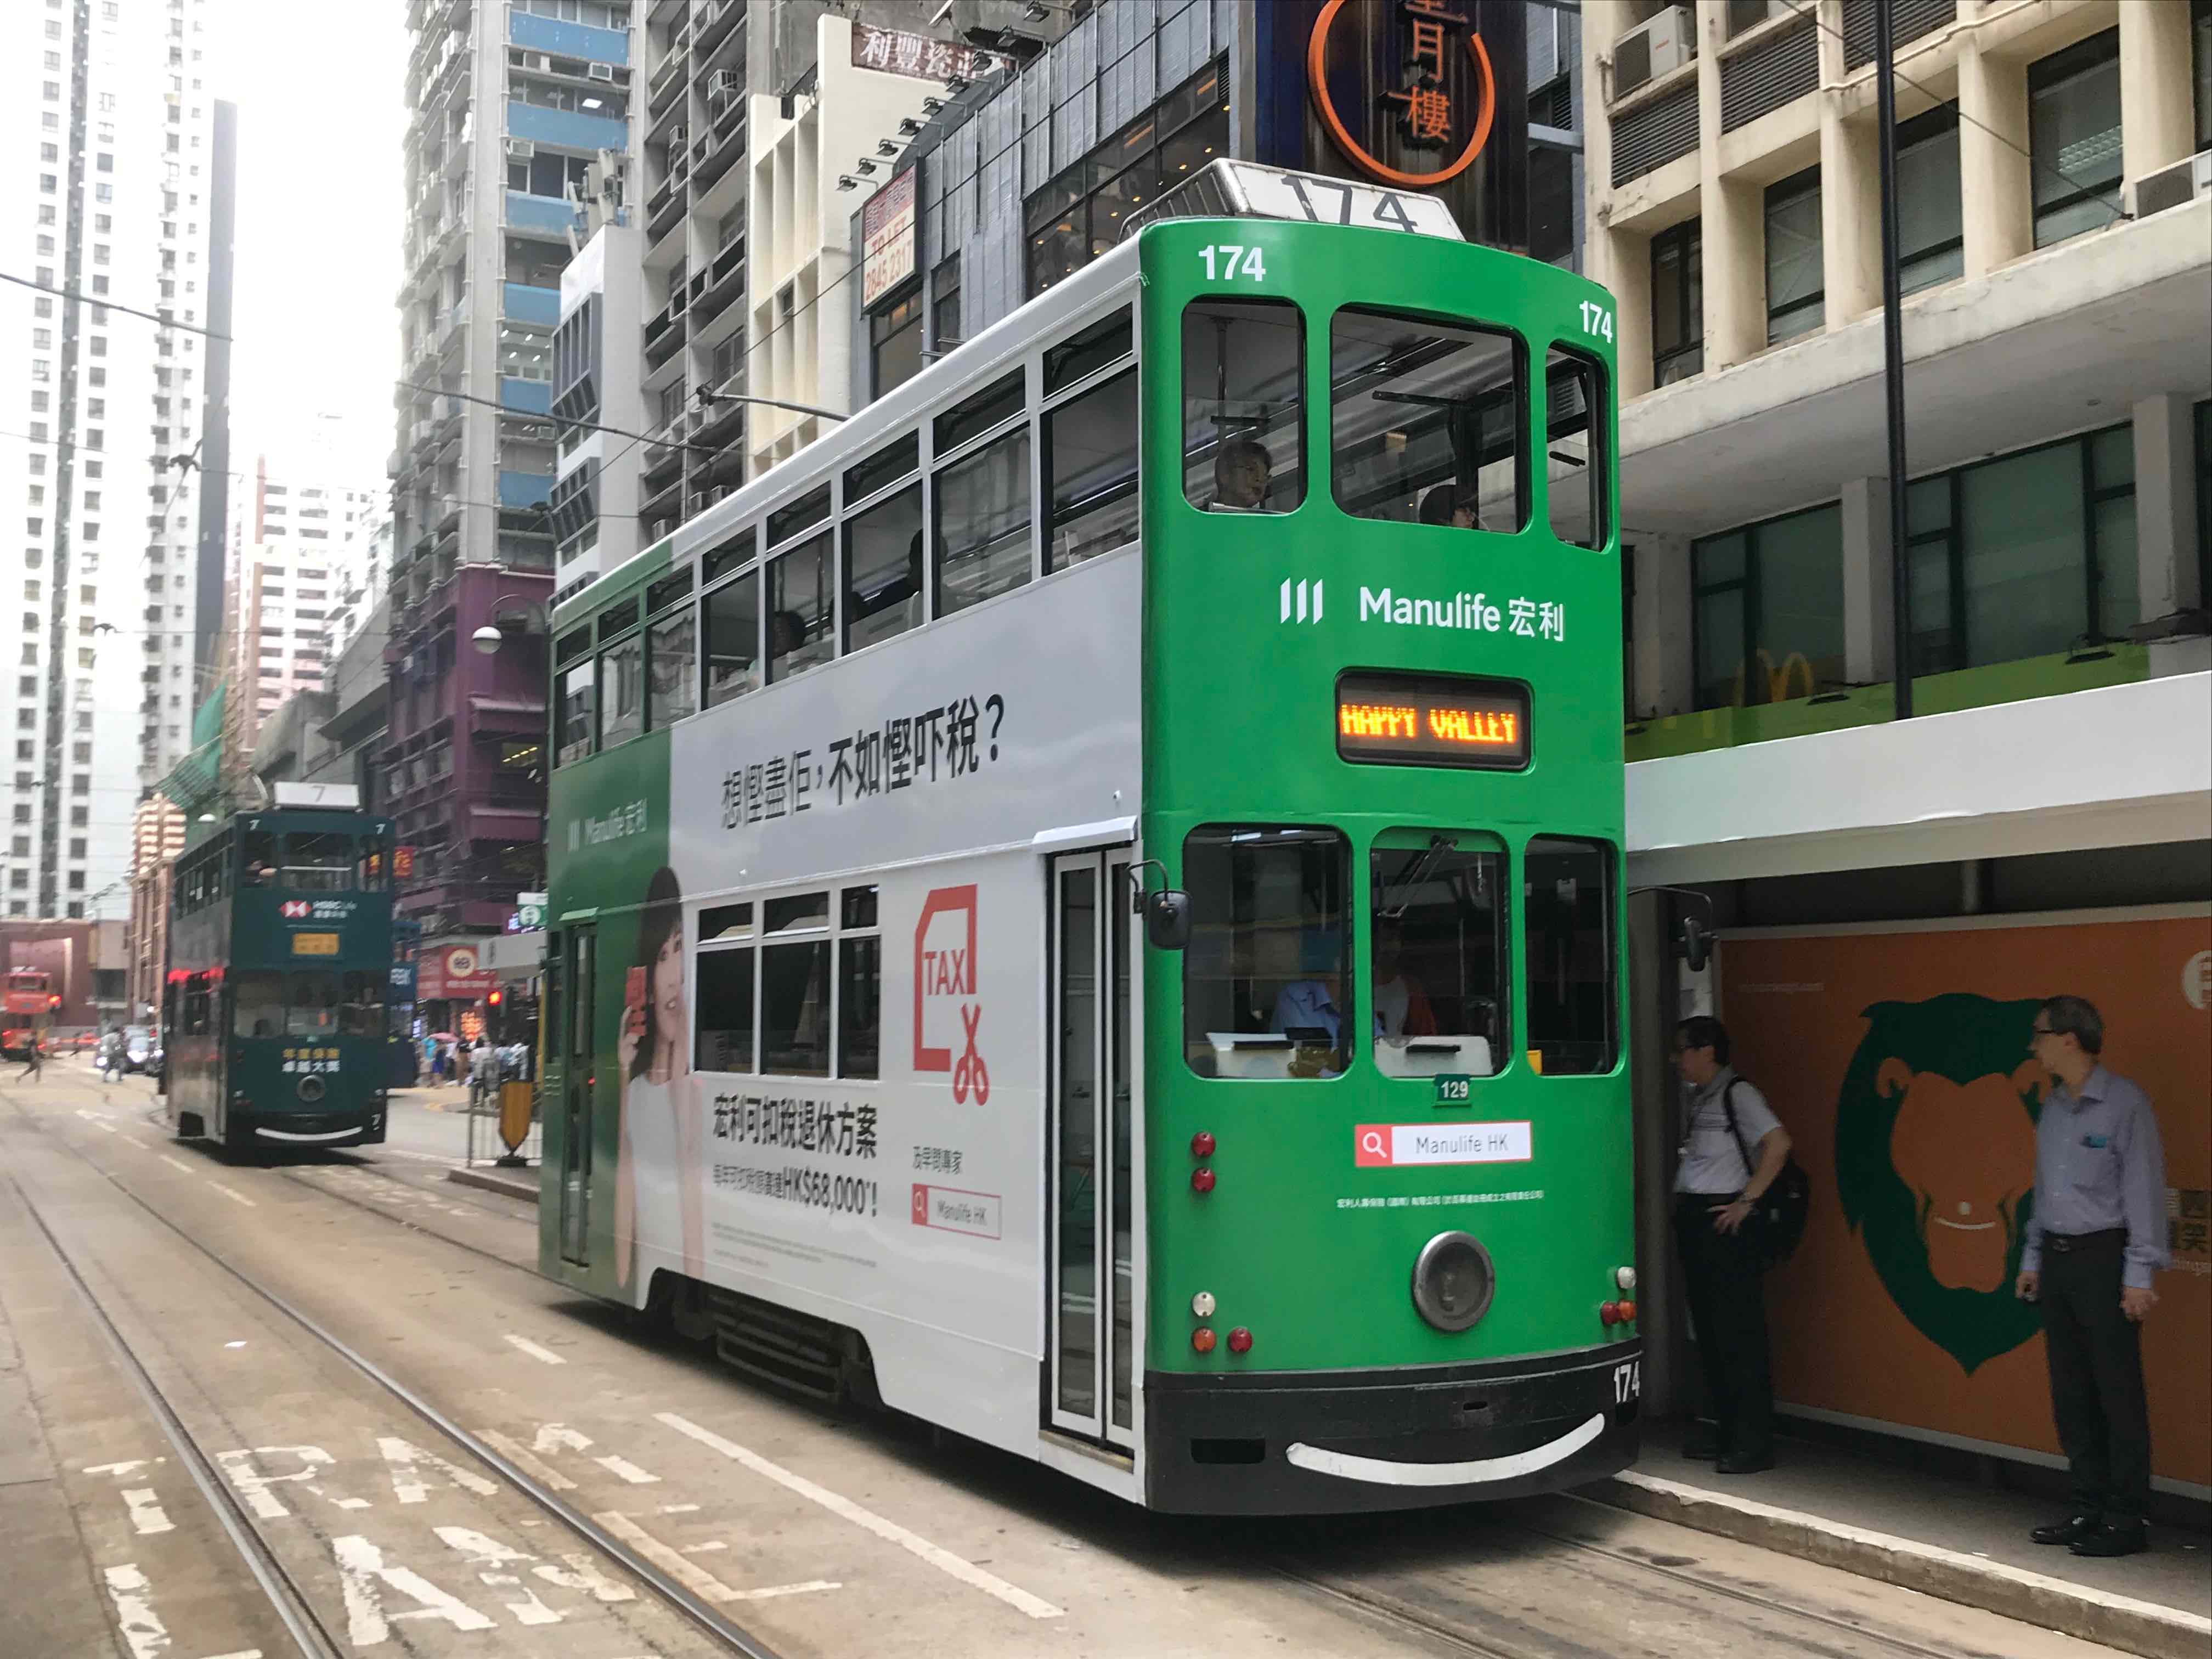 A Hong Kong tram. Photo by Chad Williams.